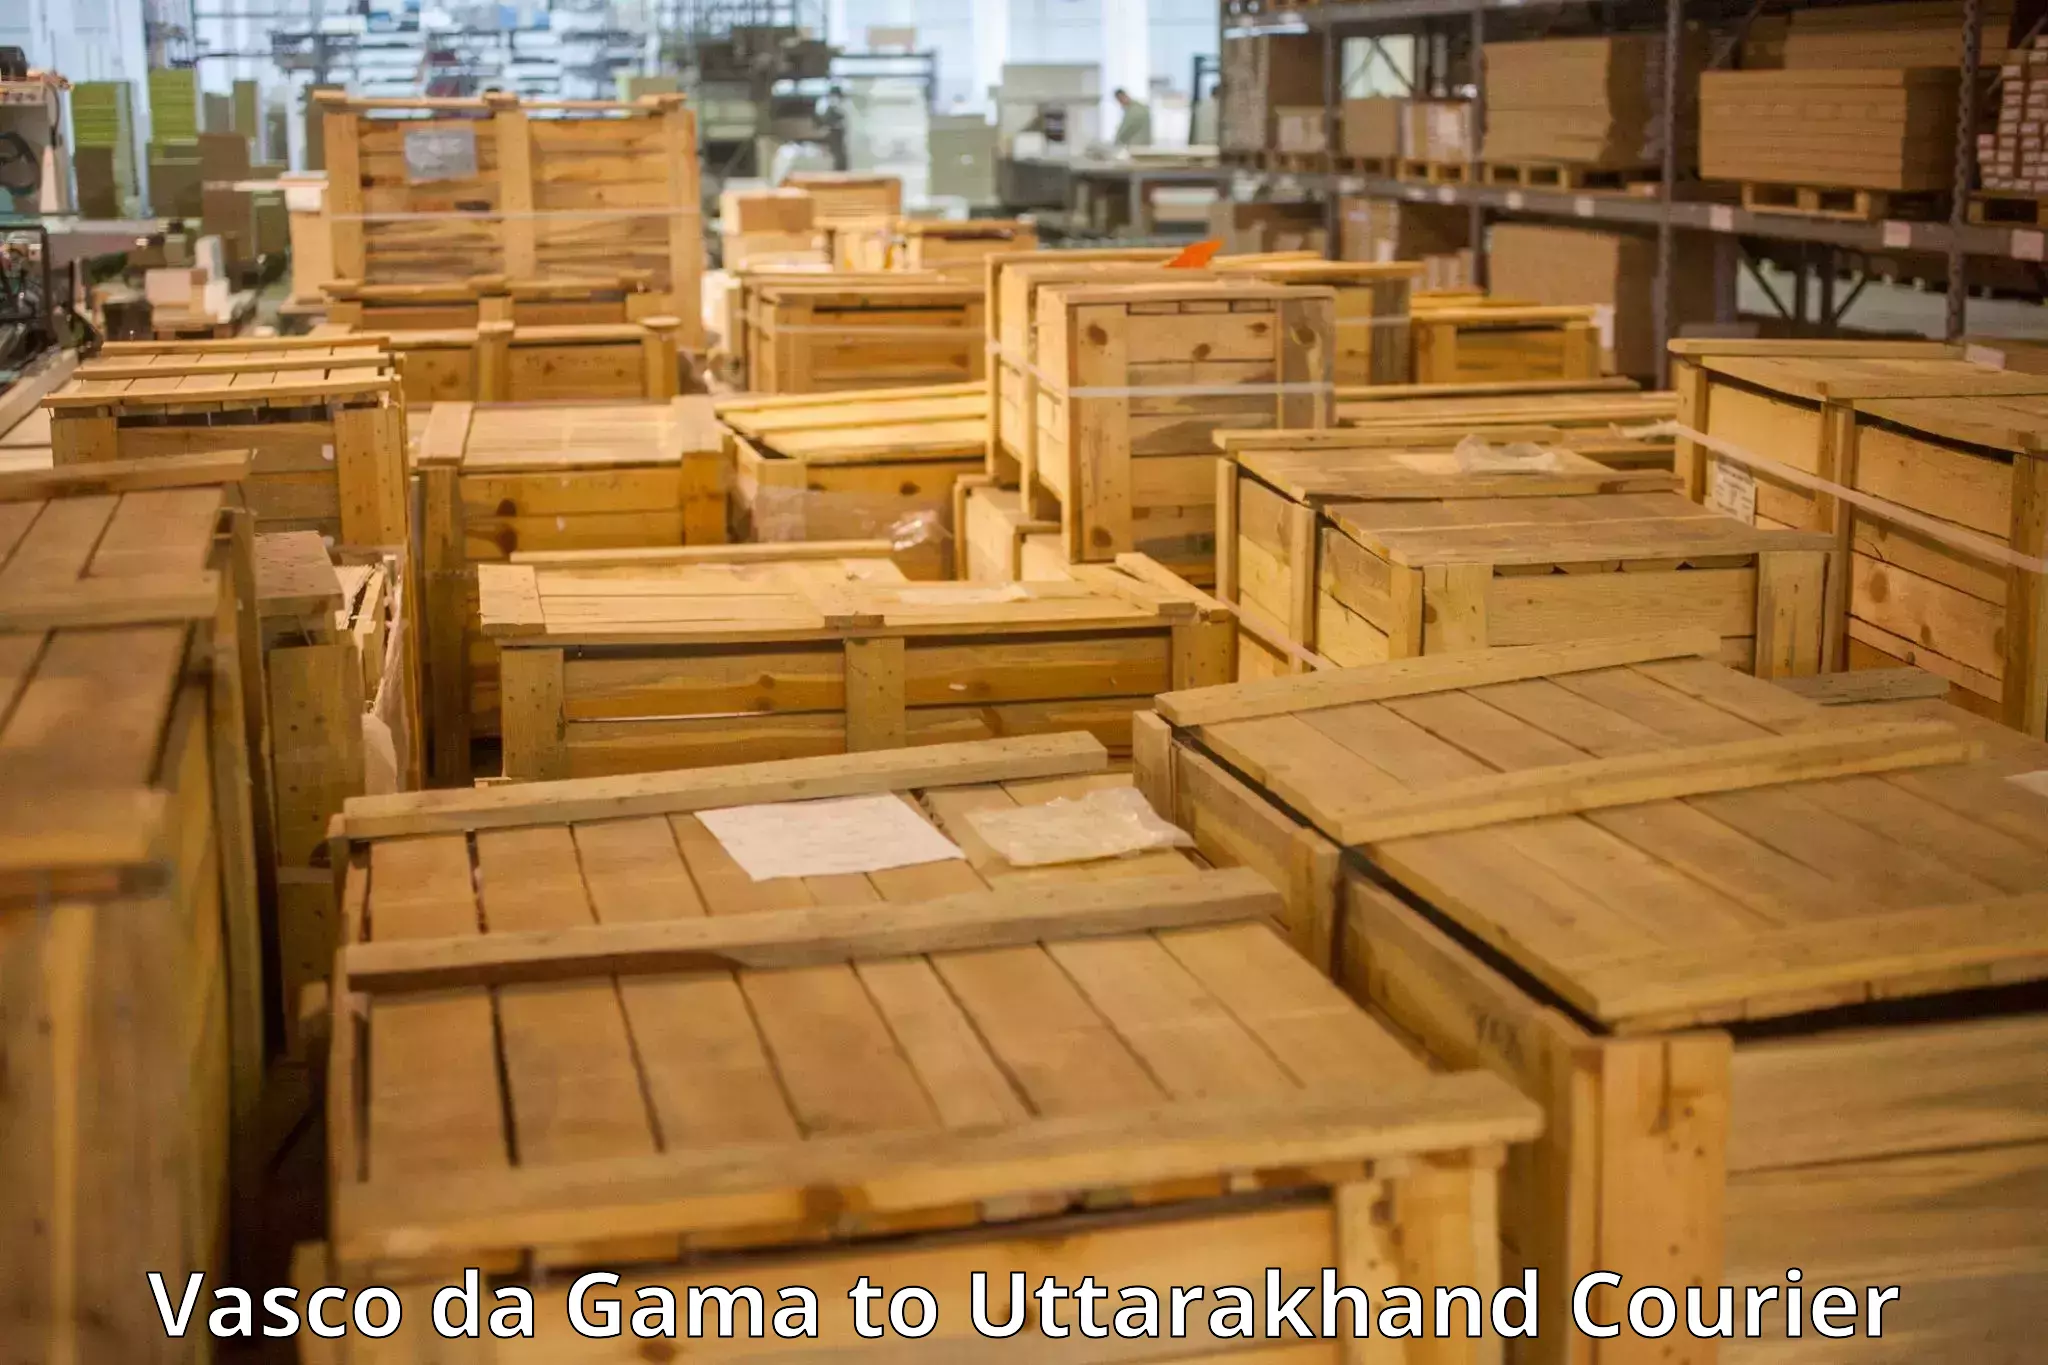 Baggage delivery technology Vasco da Gama to Uttarakhand